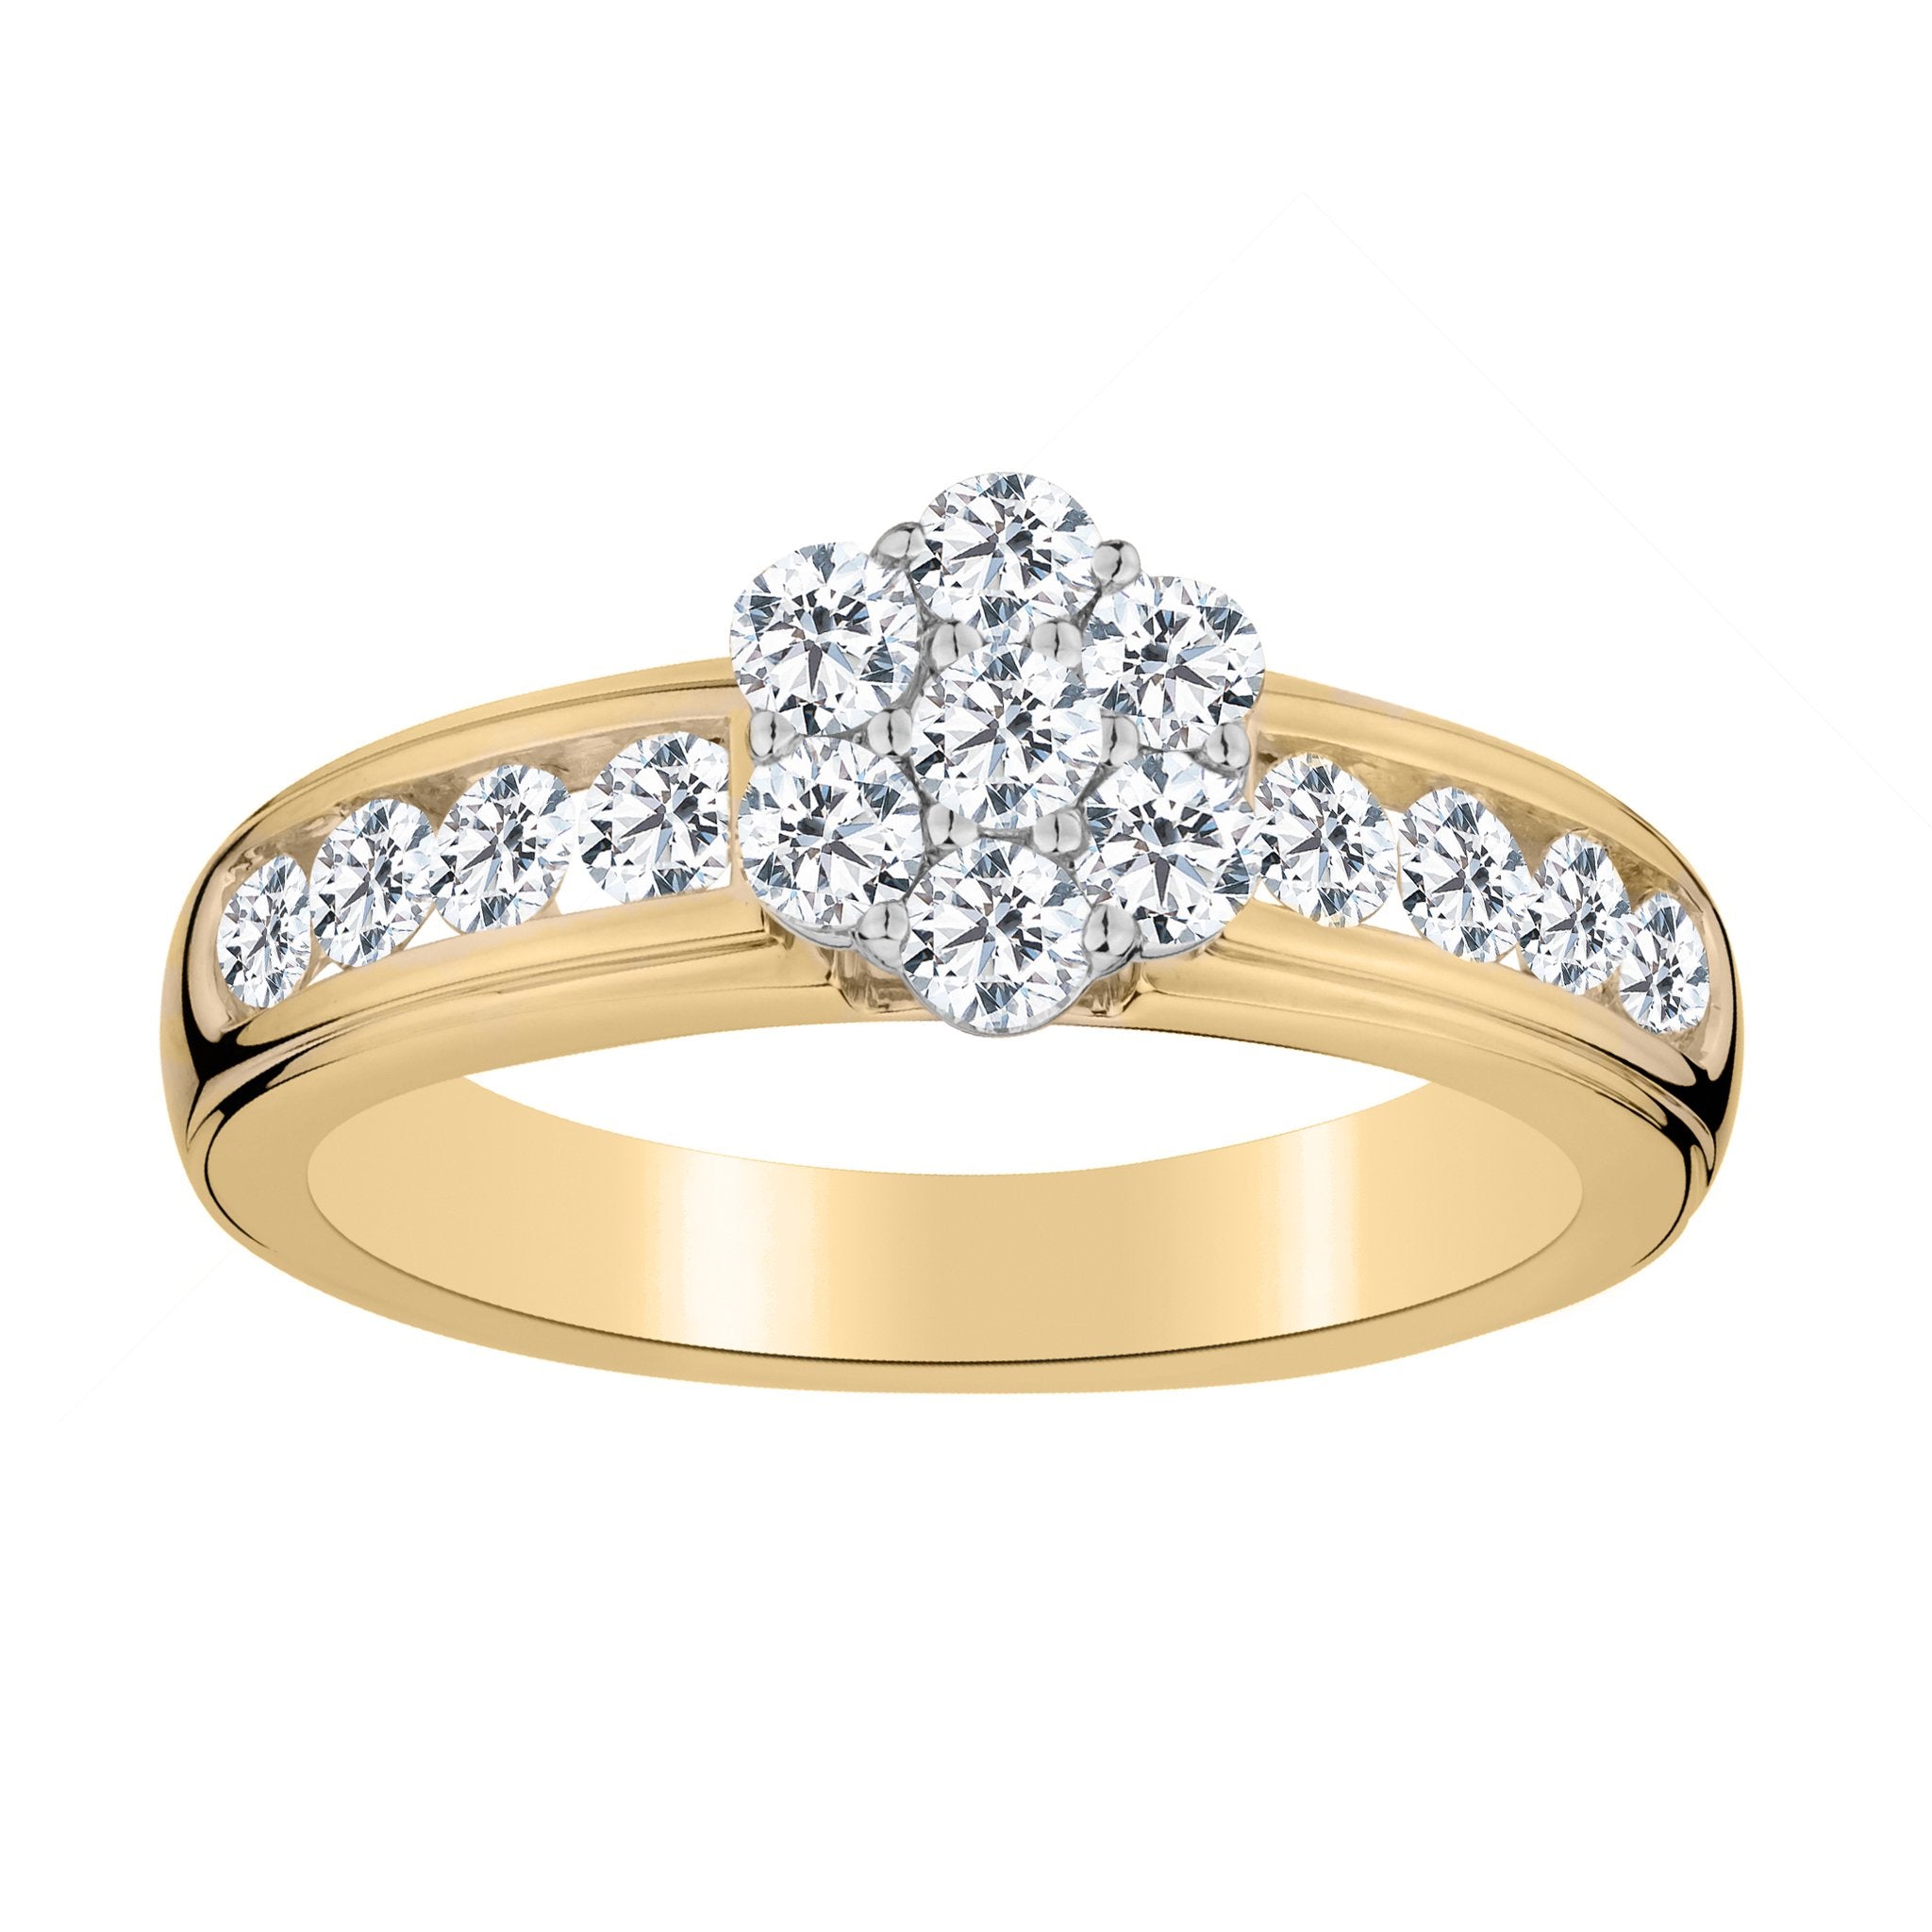 .92 CARAT DIAMOND "FLOWER" RING, 10kt YELLOW GOLD - Griffin Jewellery Designs